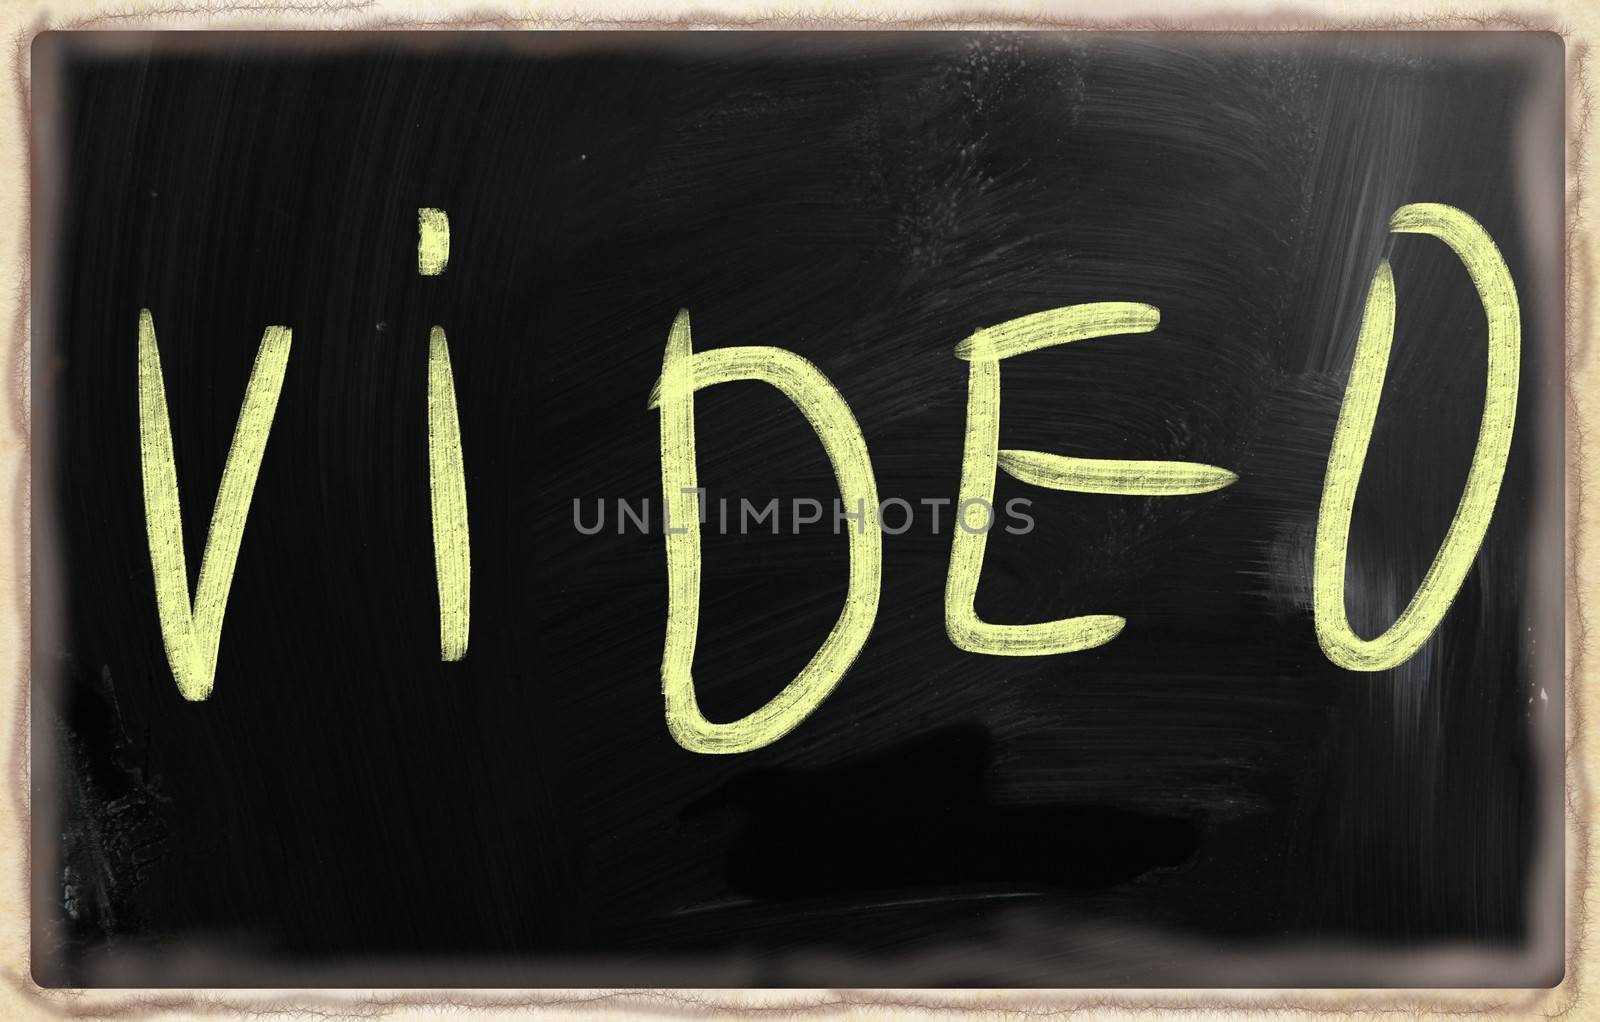 social media concept - text handwritten on a blackboard